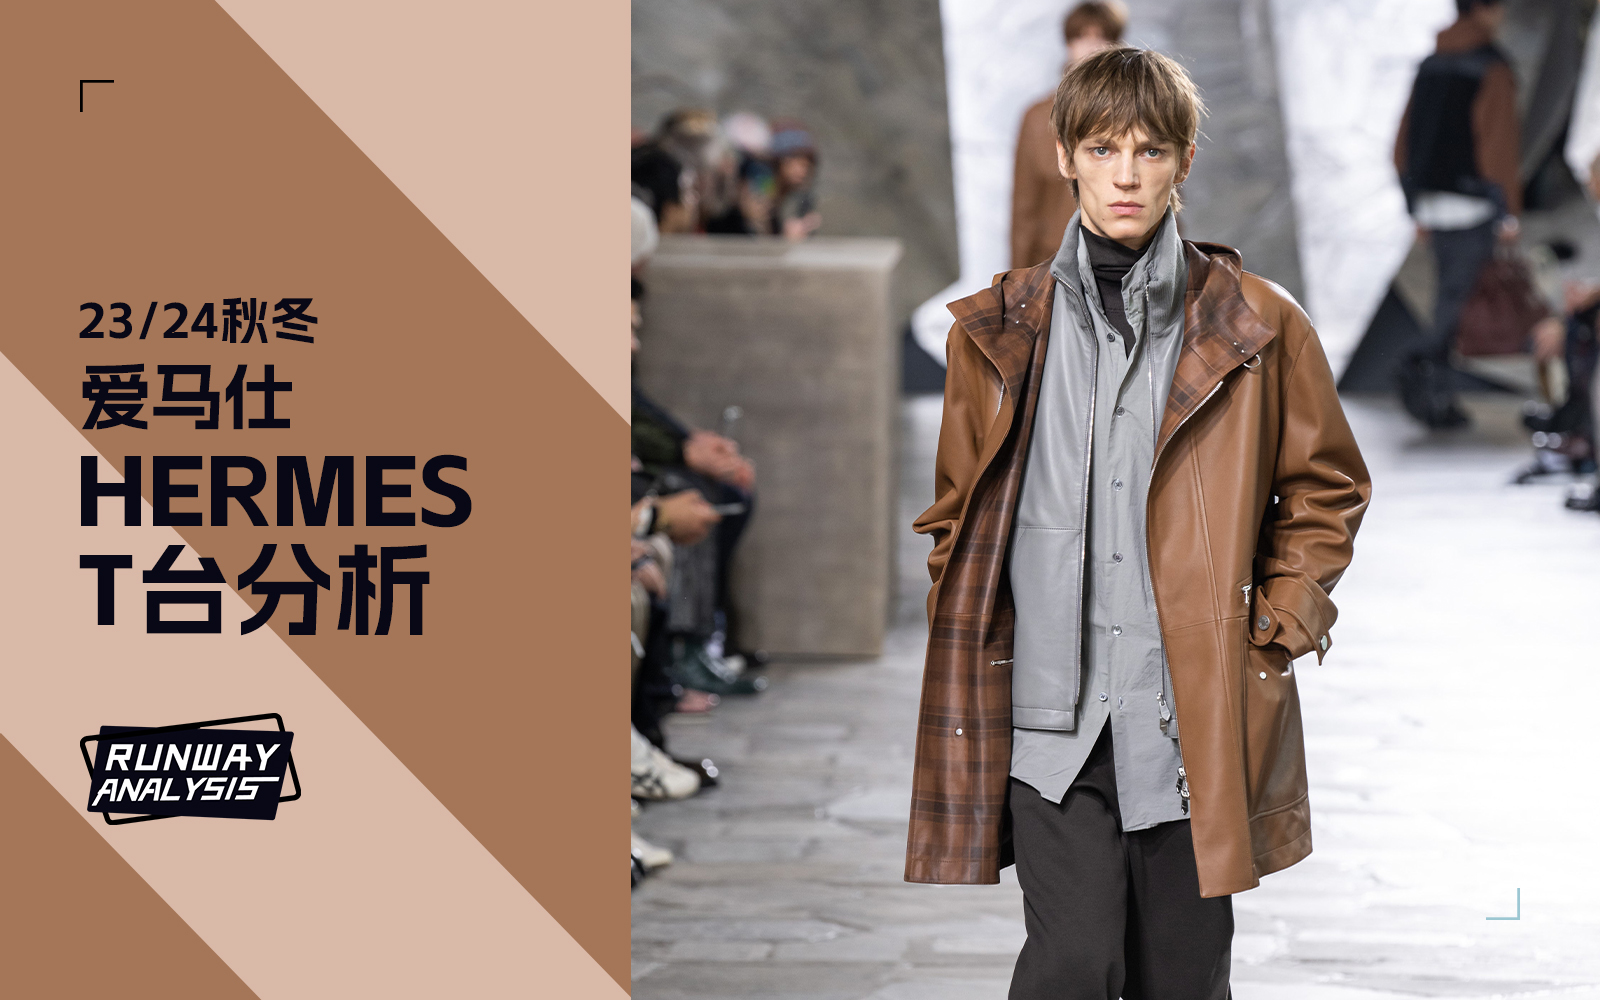 Walking Gentlemen -- The Menswear Runway Analysis of Hermès